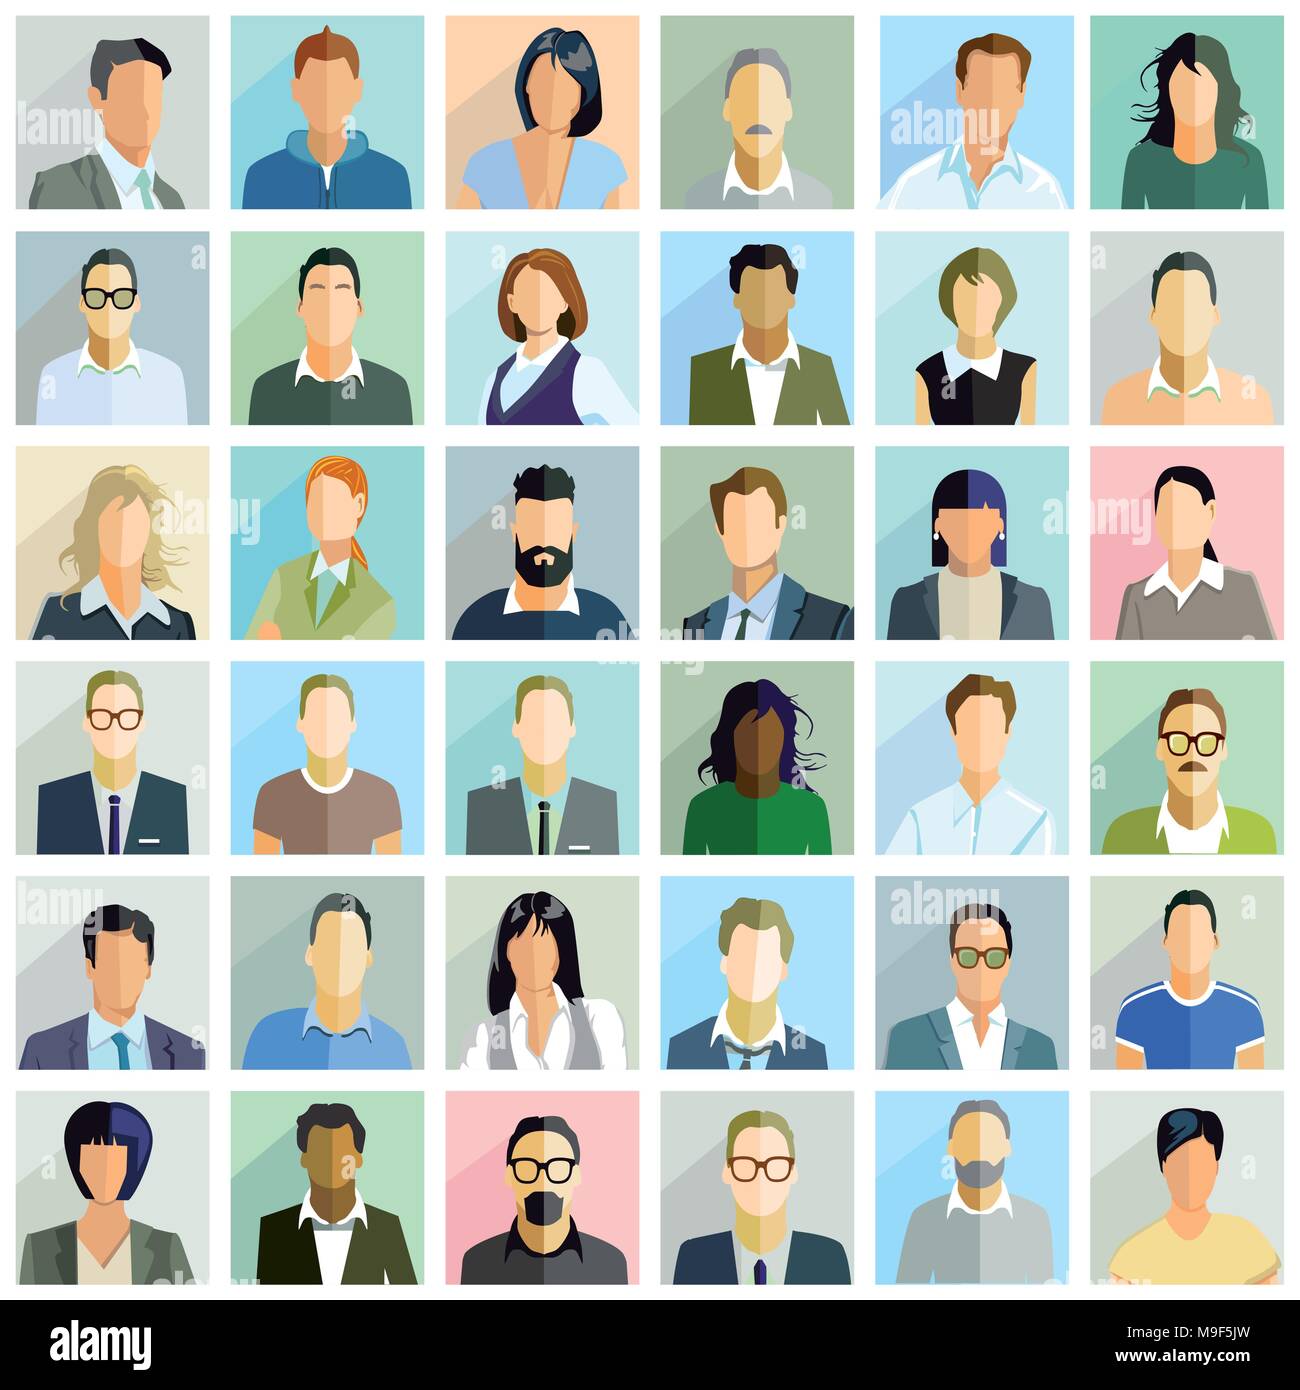 Group people portrait, illustration Stock Vector